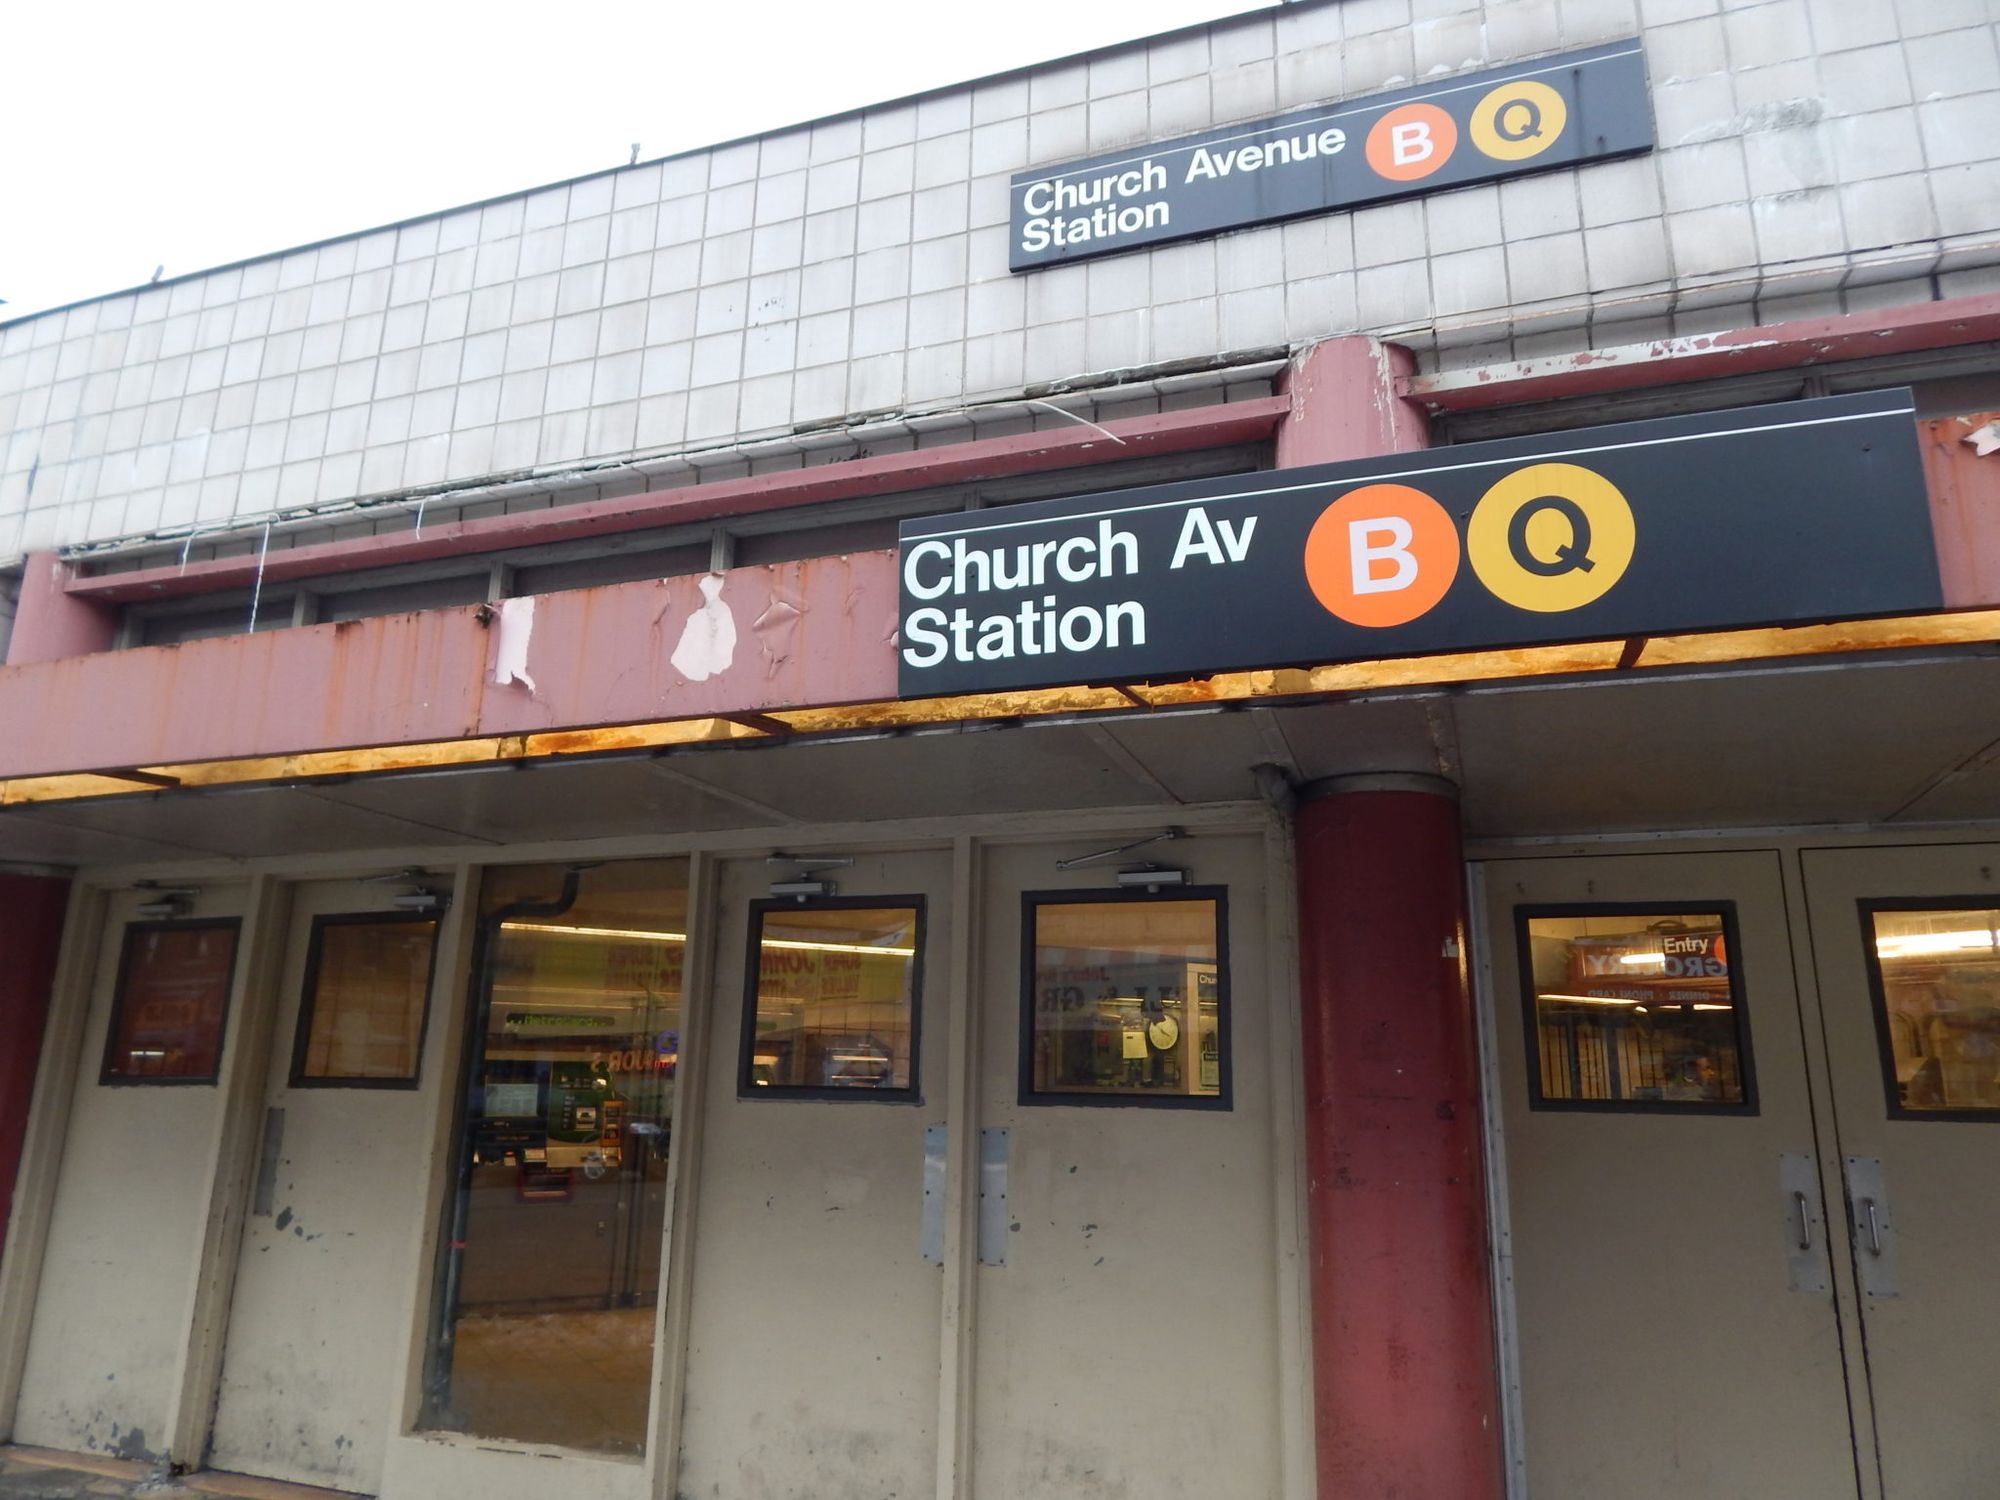 Church Avenue B:Q subway station